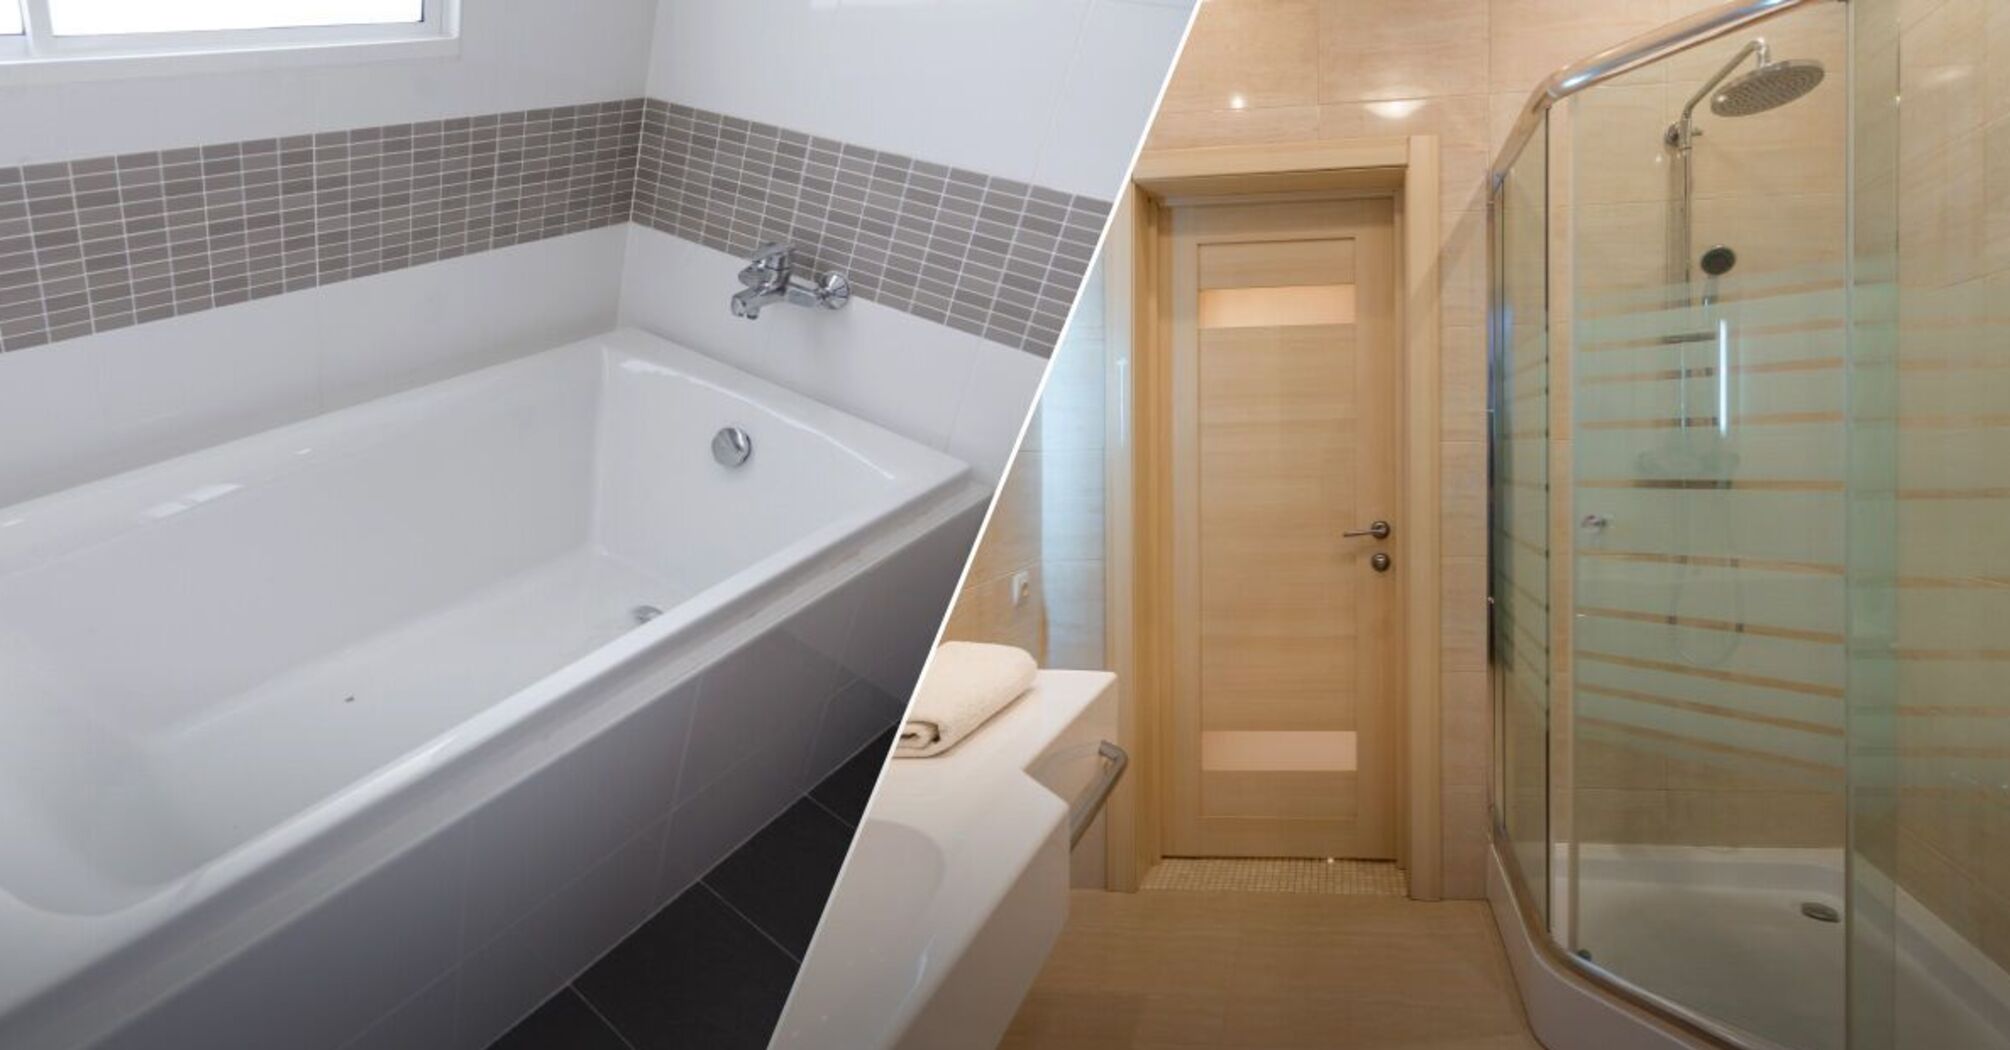 Comparison of a bathtub and a shower cabin